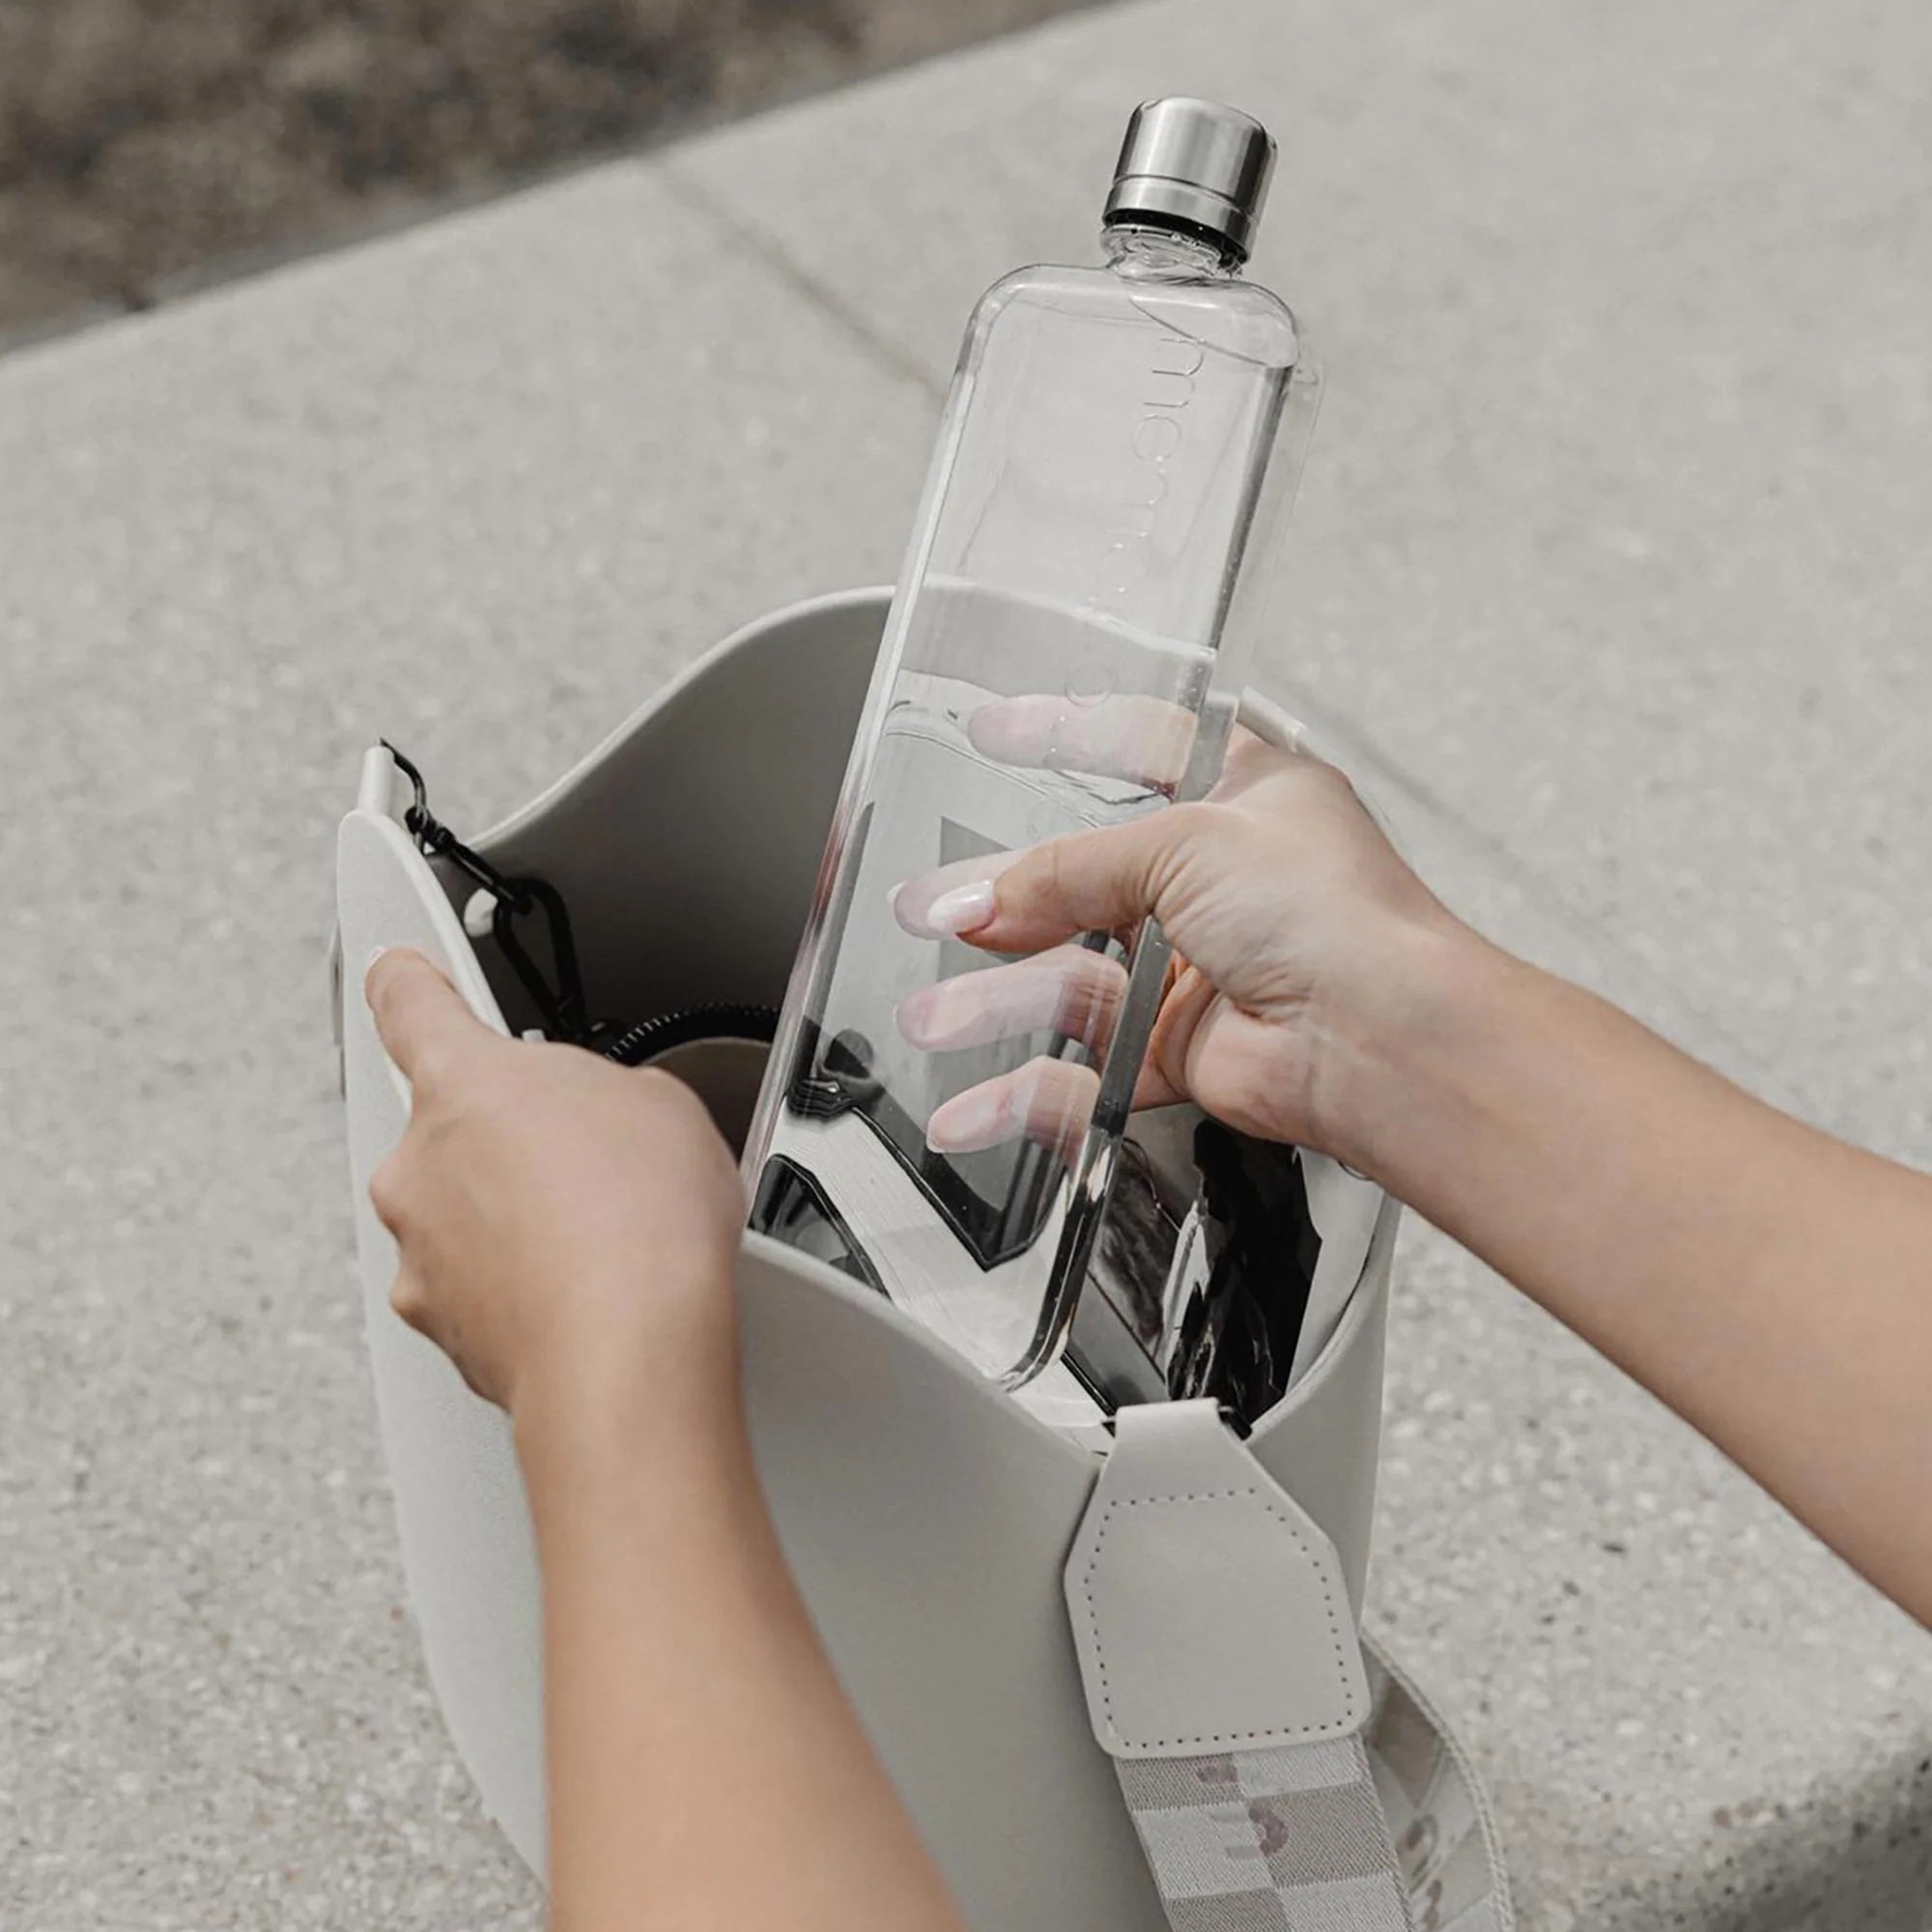 Memobottle Slim - BPA mentes műanyag üveg - 450ml